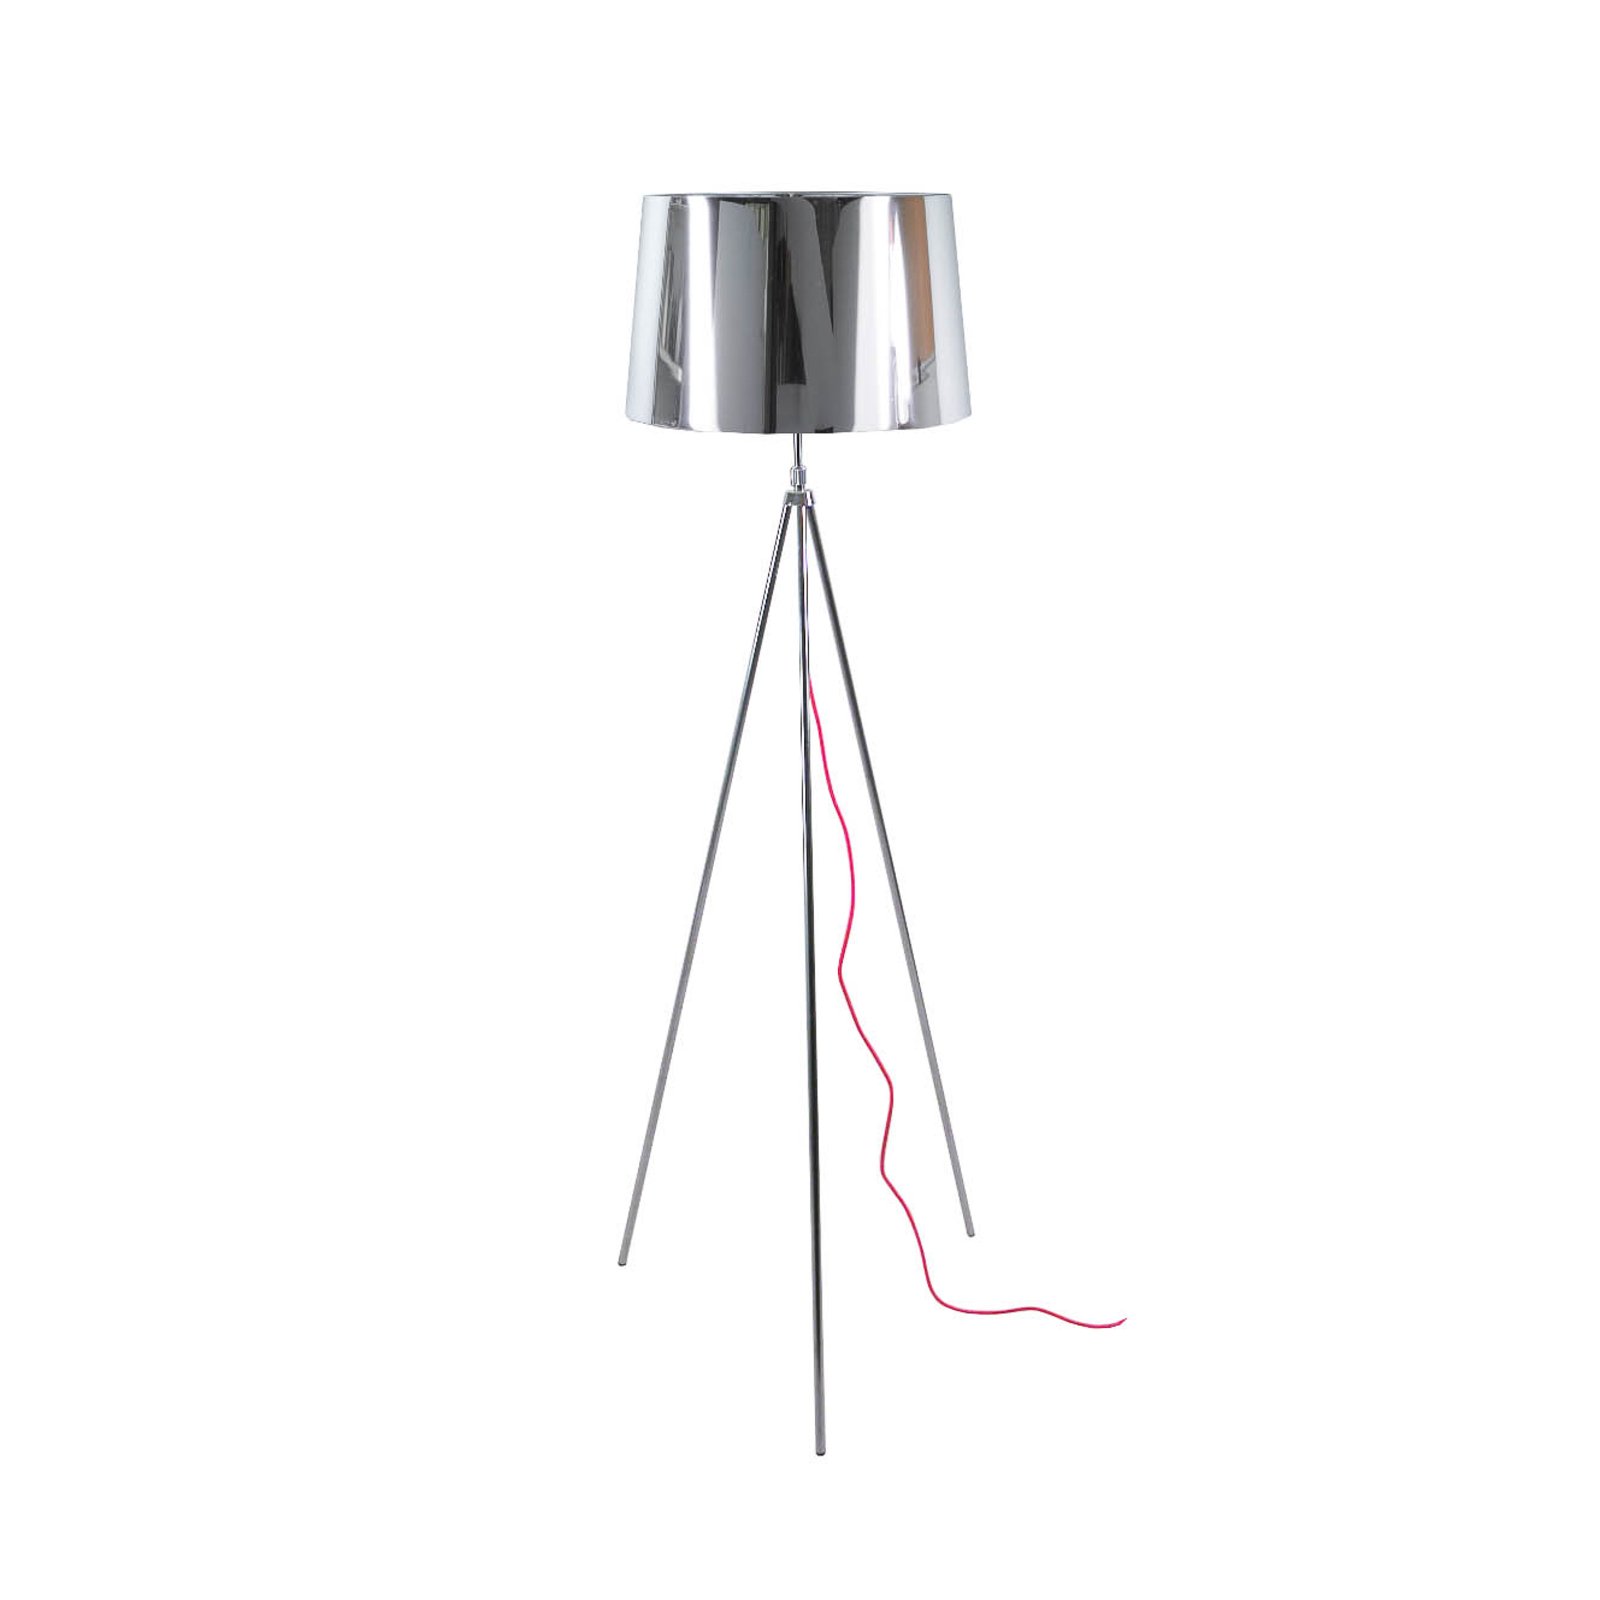 Aluminor Tropic gulvlampe, krom, rødt kabel